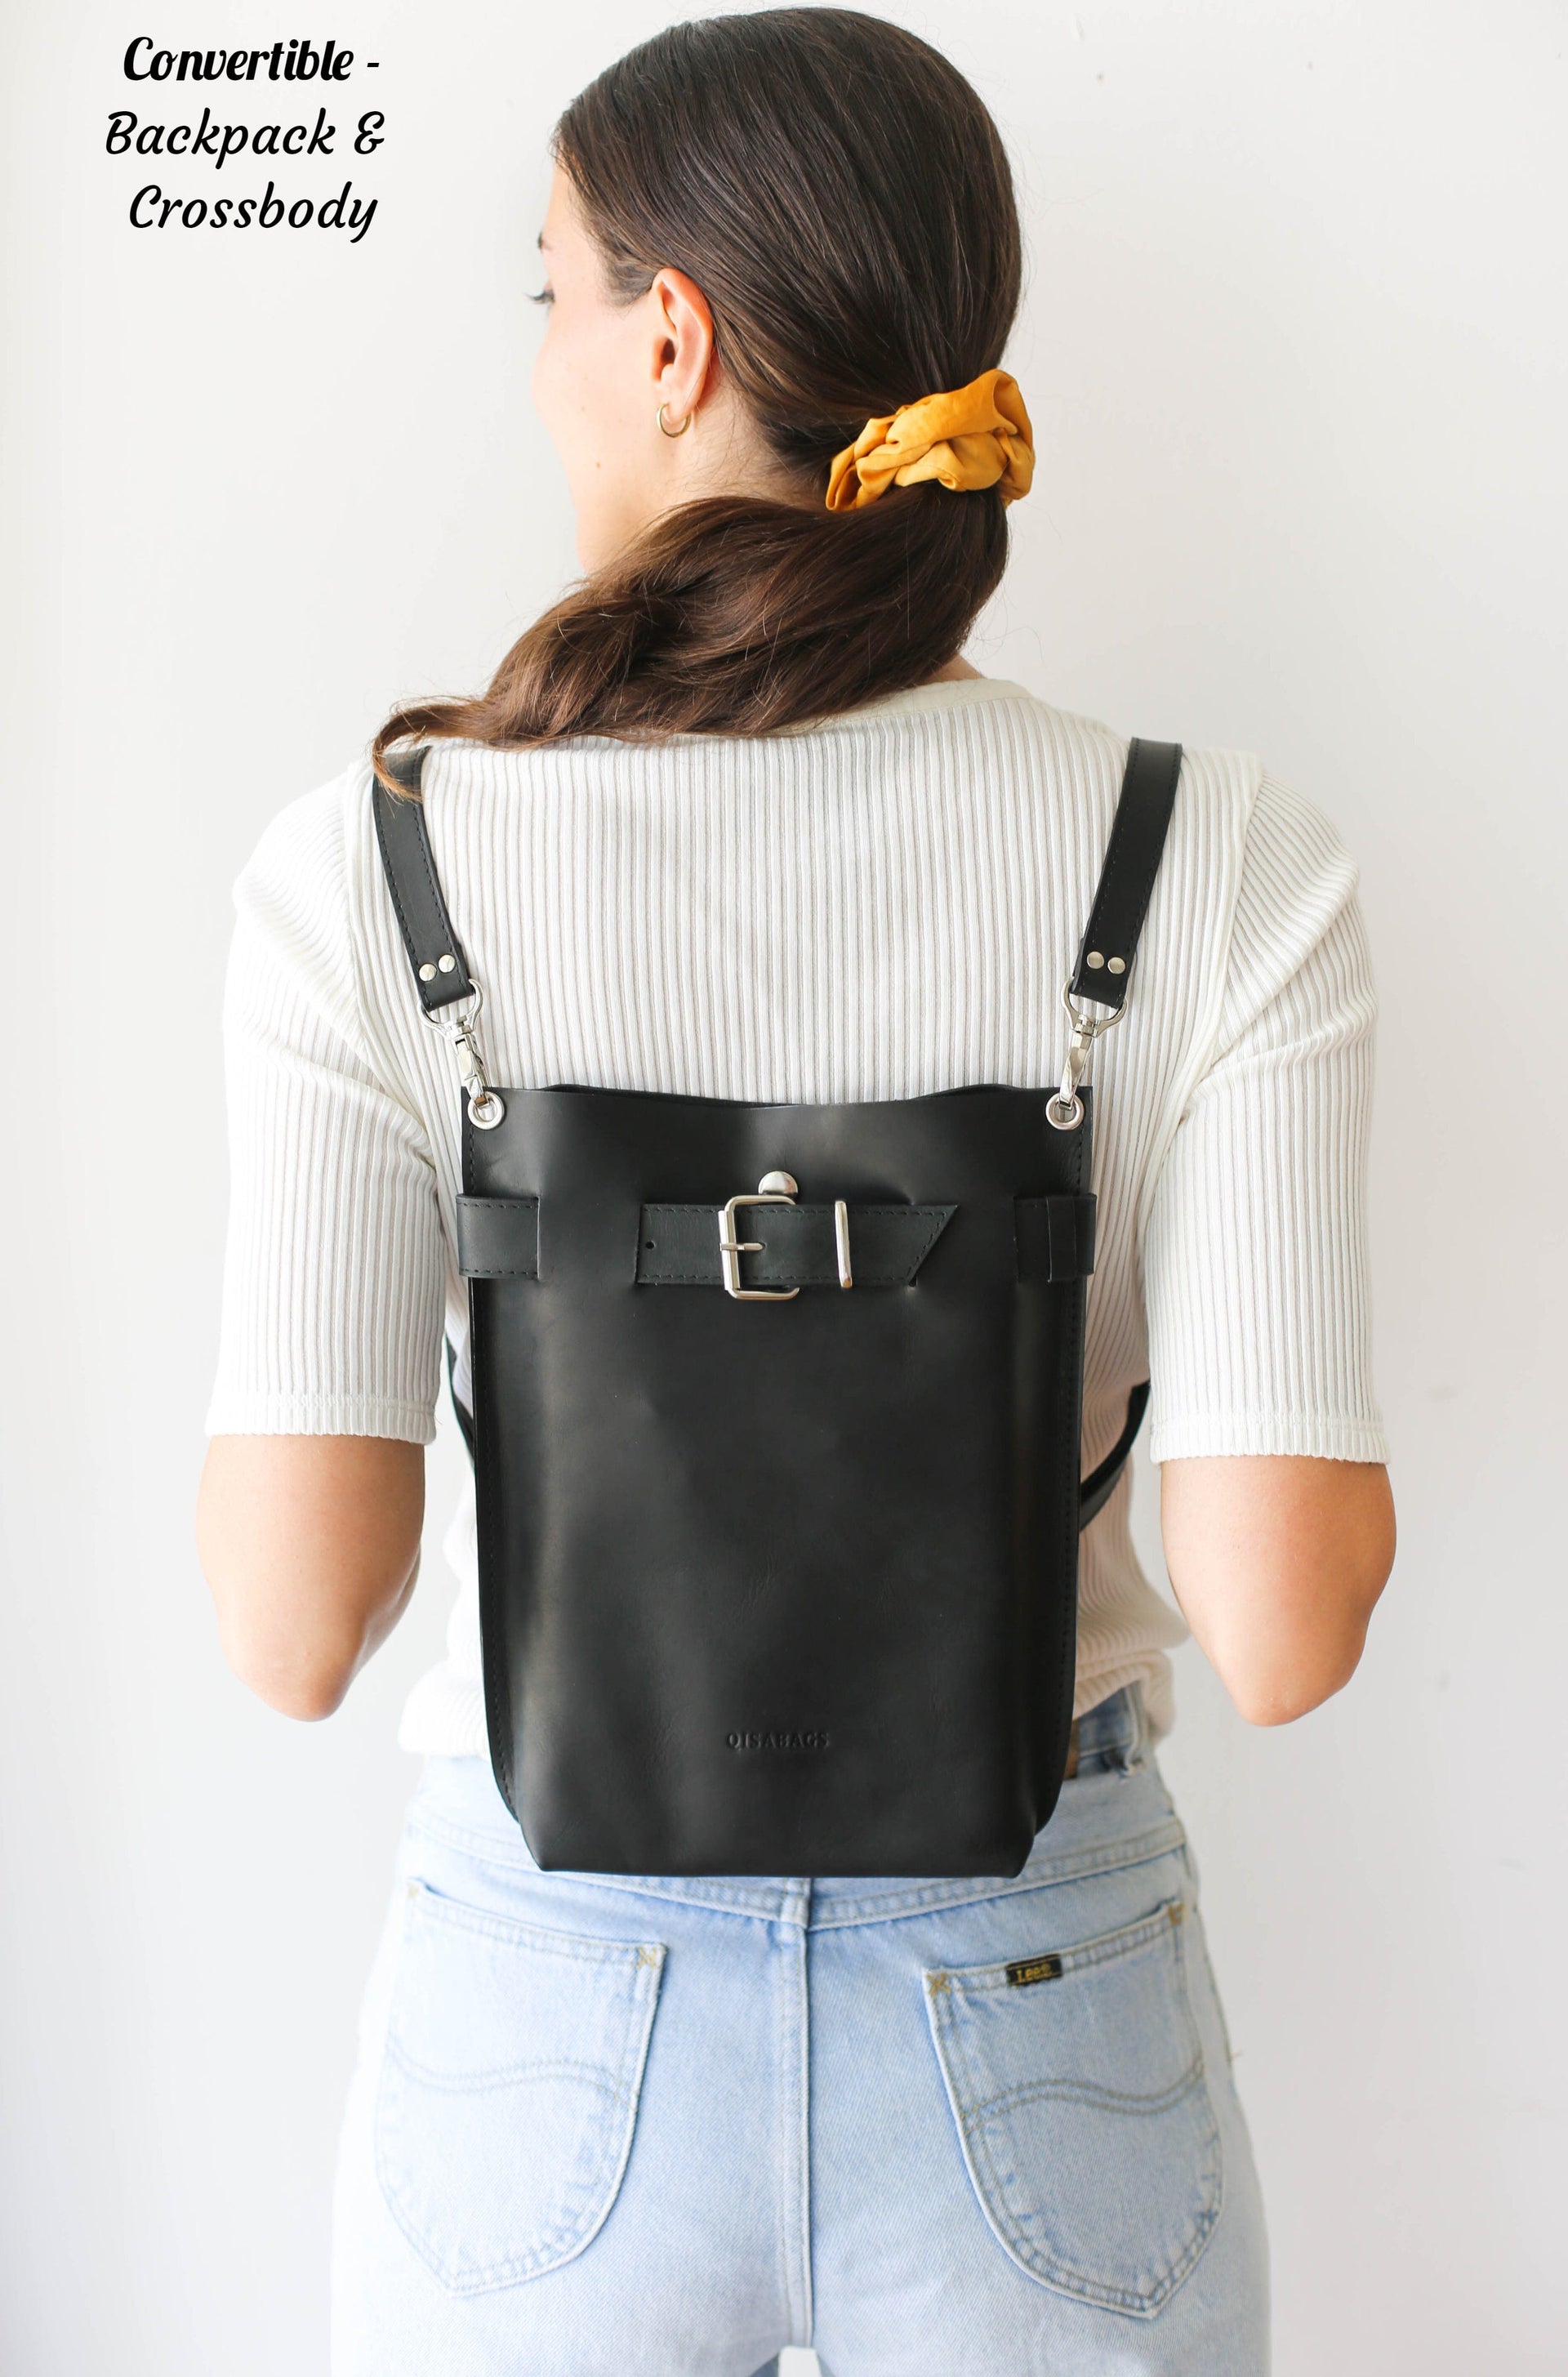 Handmade black leather backpack